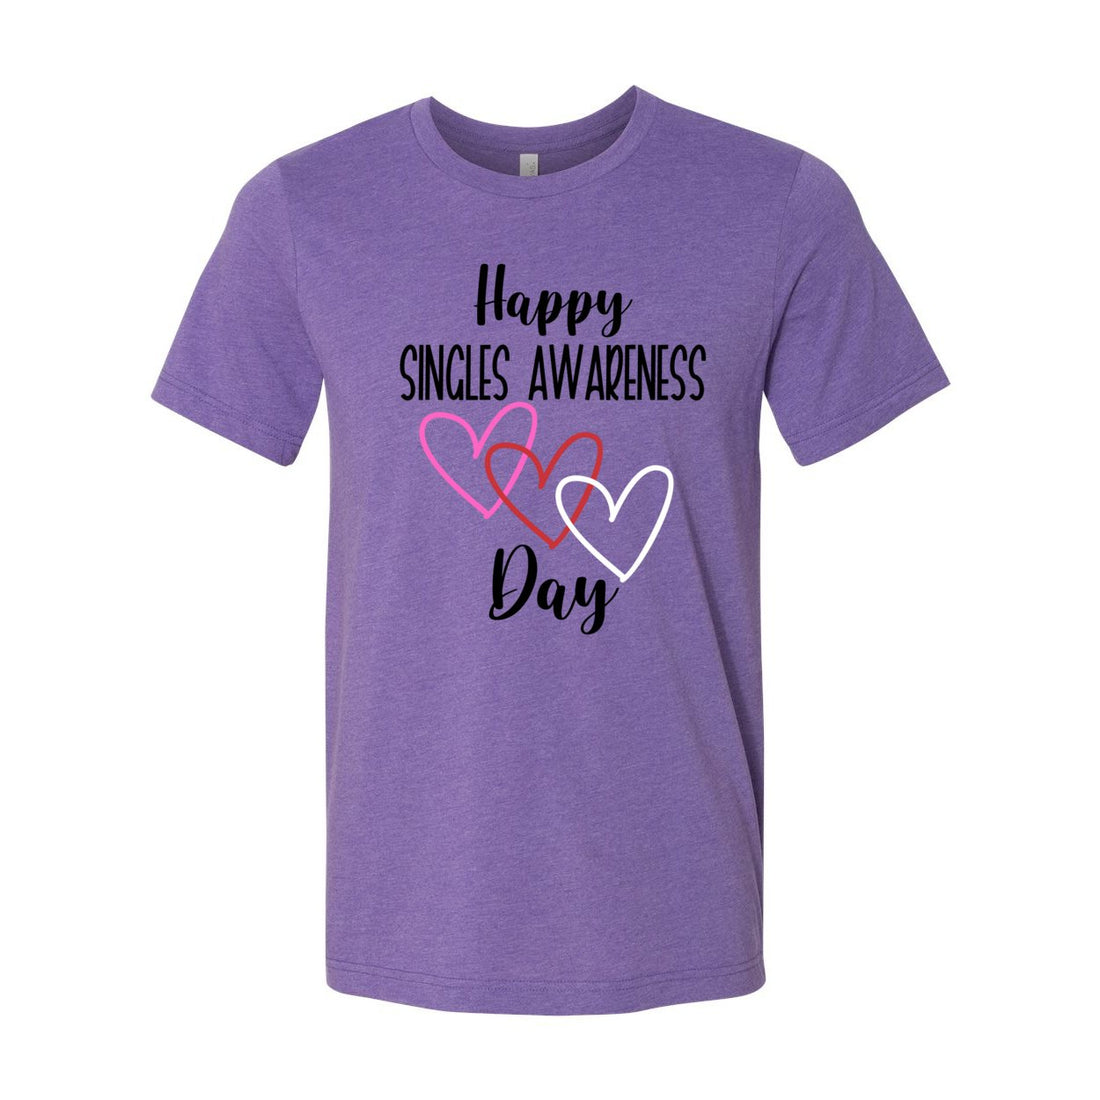 Happy Singles Awareness Day Sleeve Jersey Tee - T-Shirts - Positively Sassy - Happy Singles Awareness Day Sleeve Jersey Tee